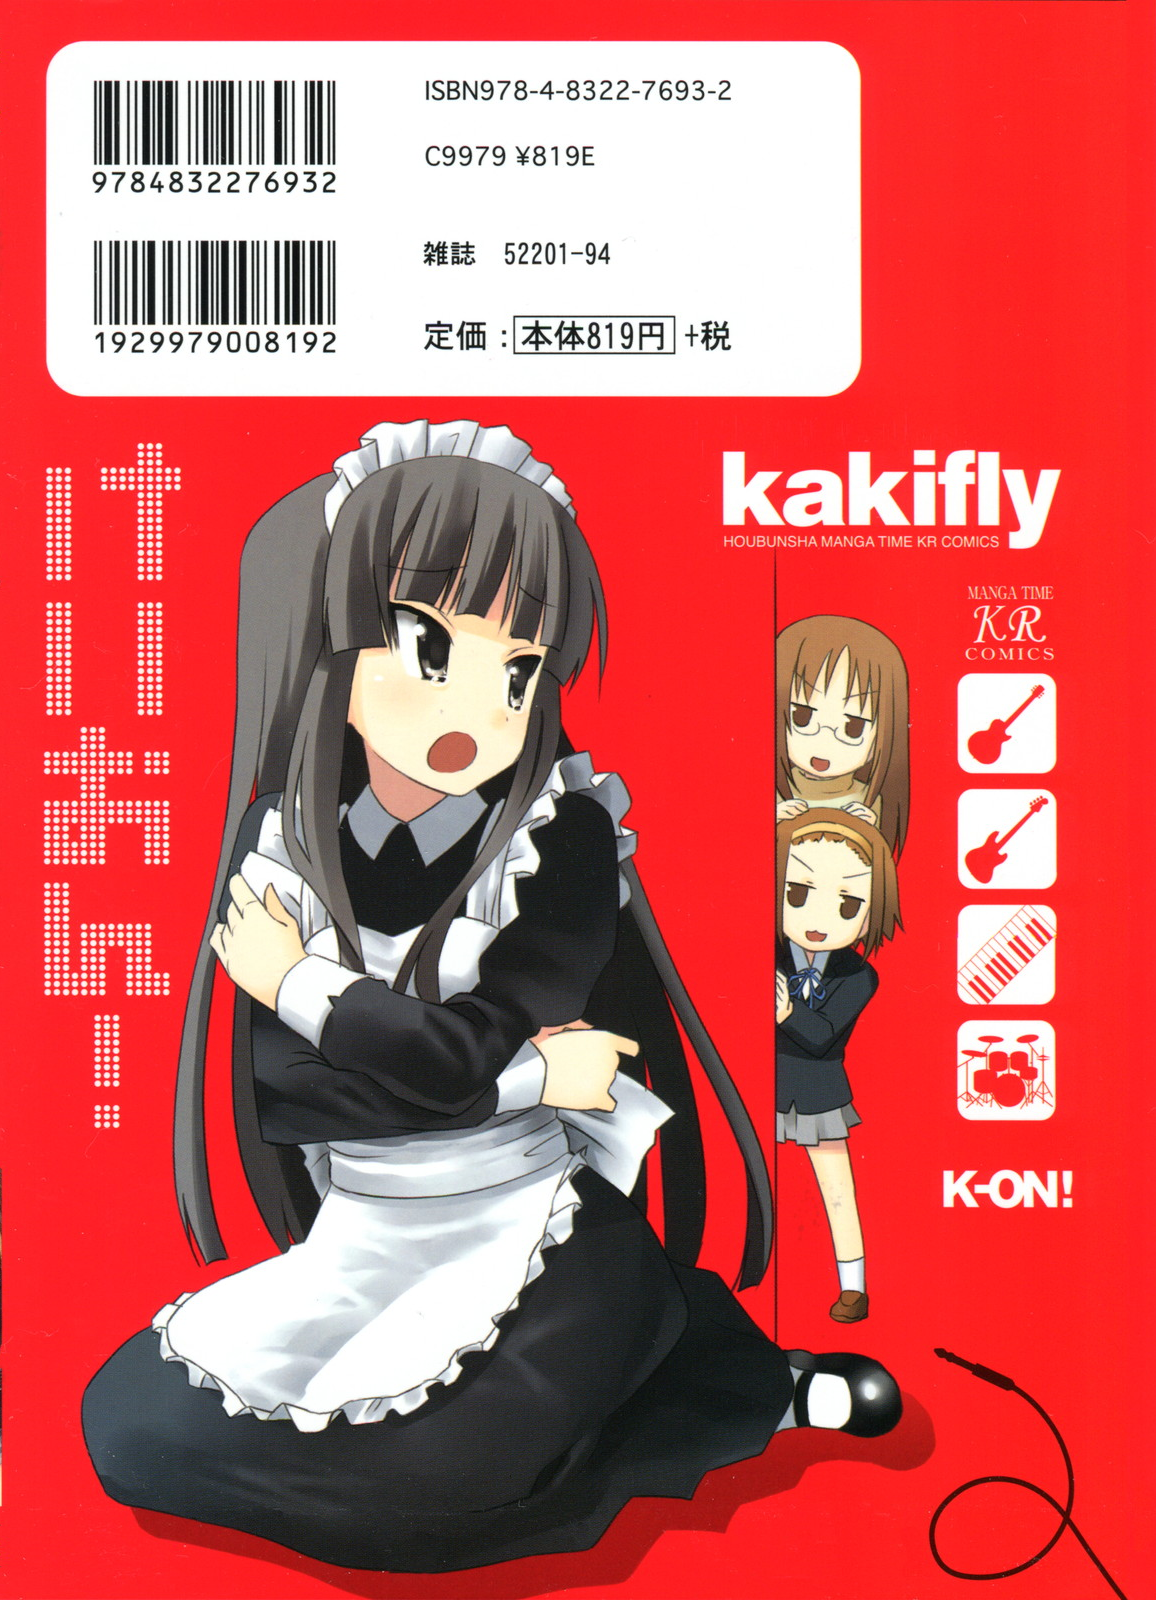 K-ON! Volume 1, K-ON! Wiki